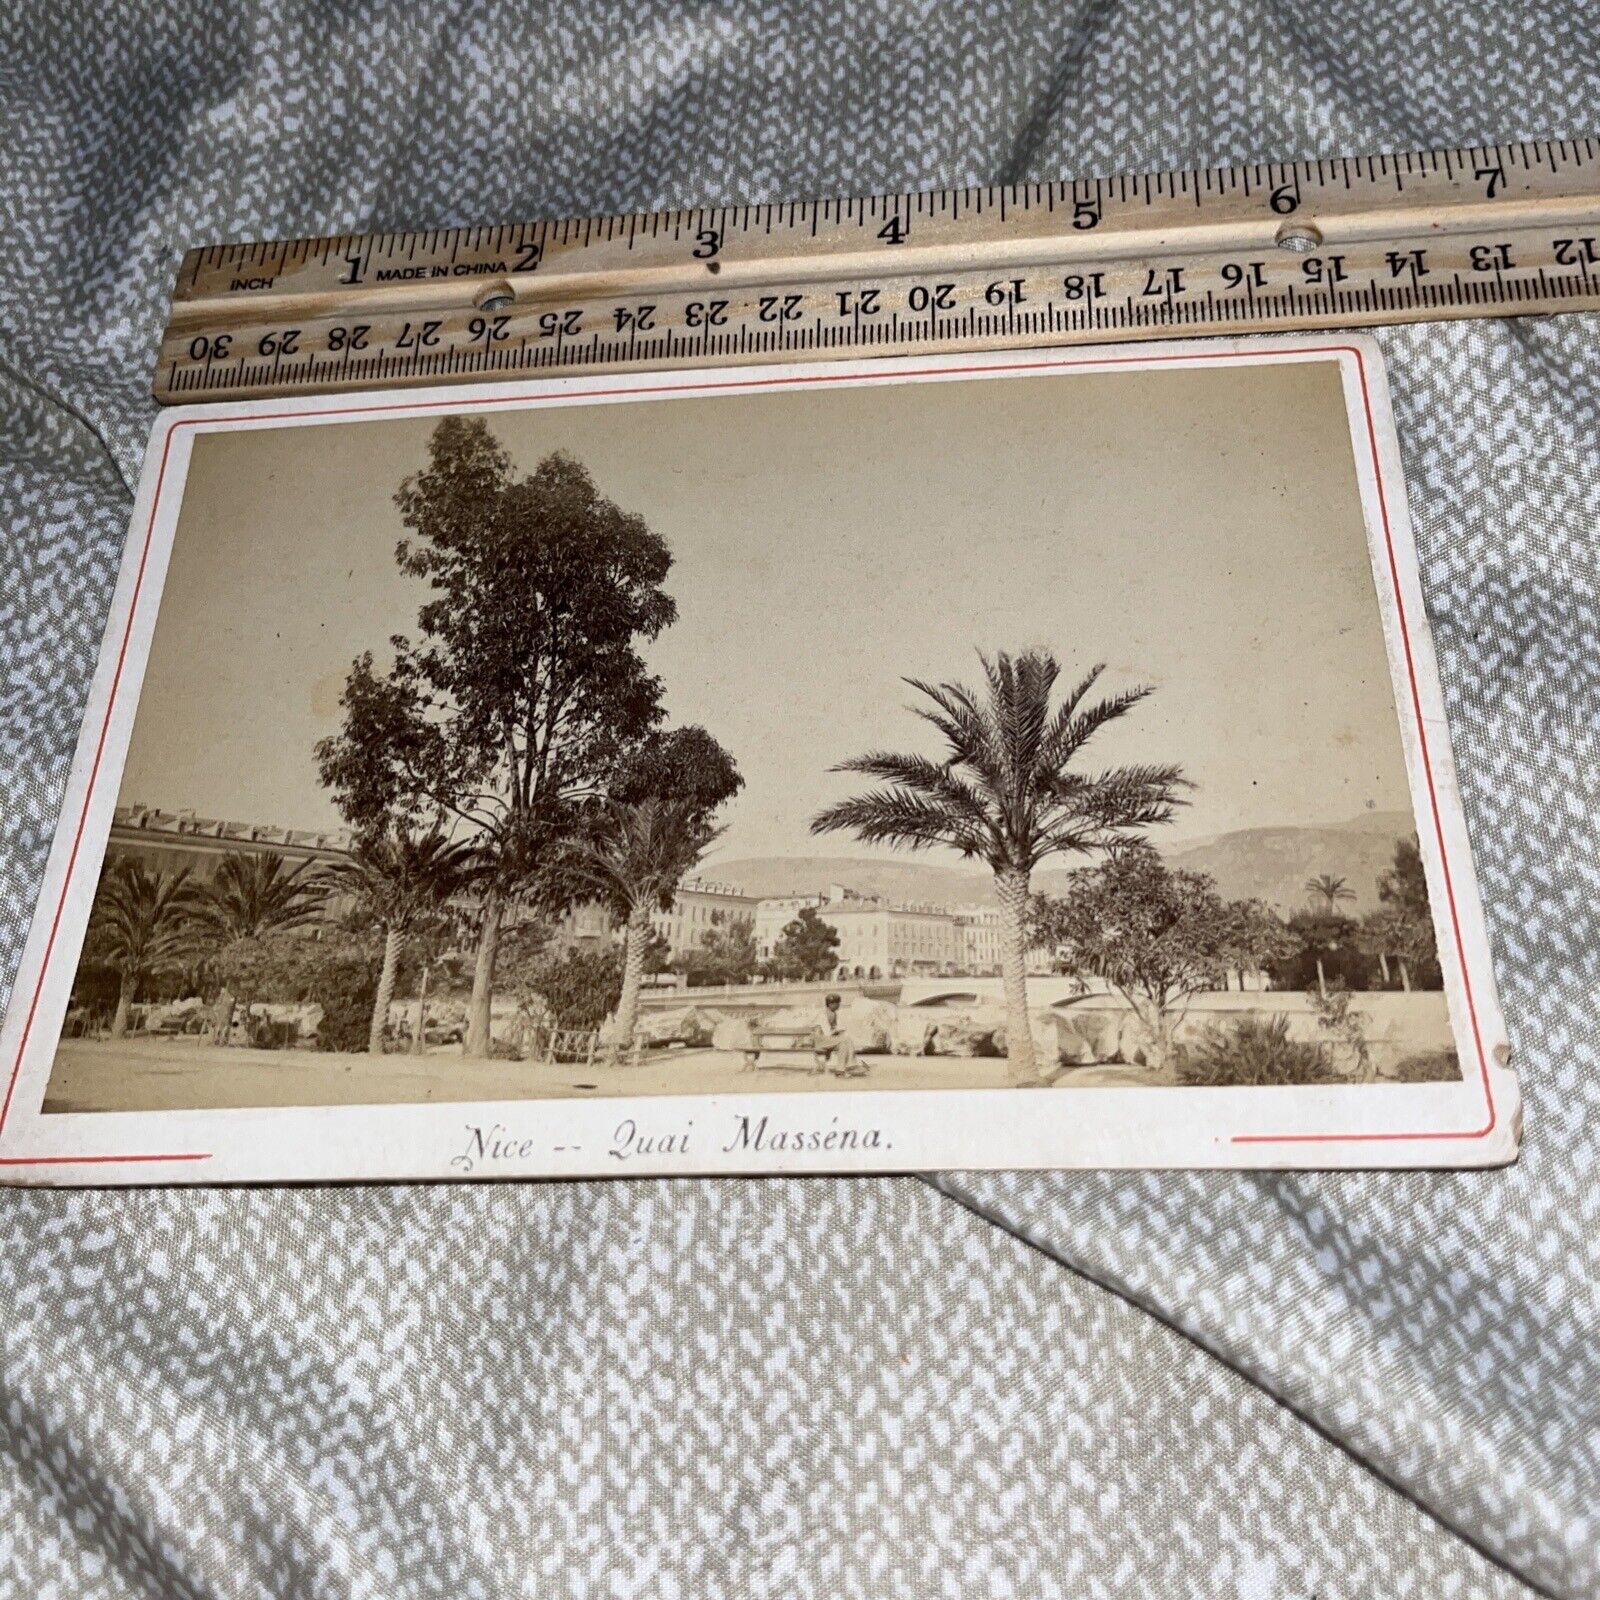 Antique Cabinet Card: Australian Eucalyptus in Nice Quai Massena France Masséna